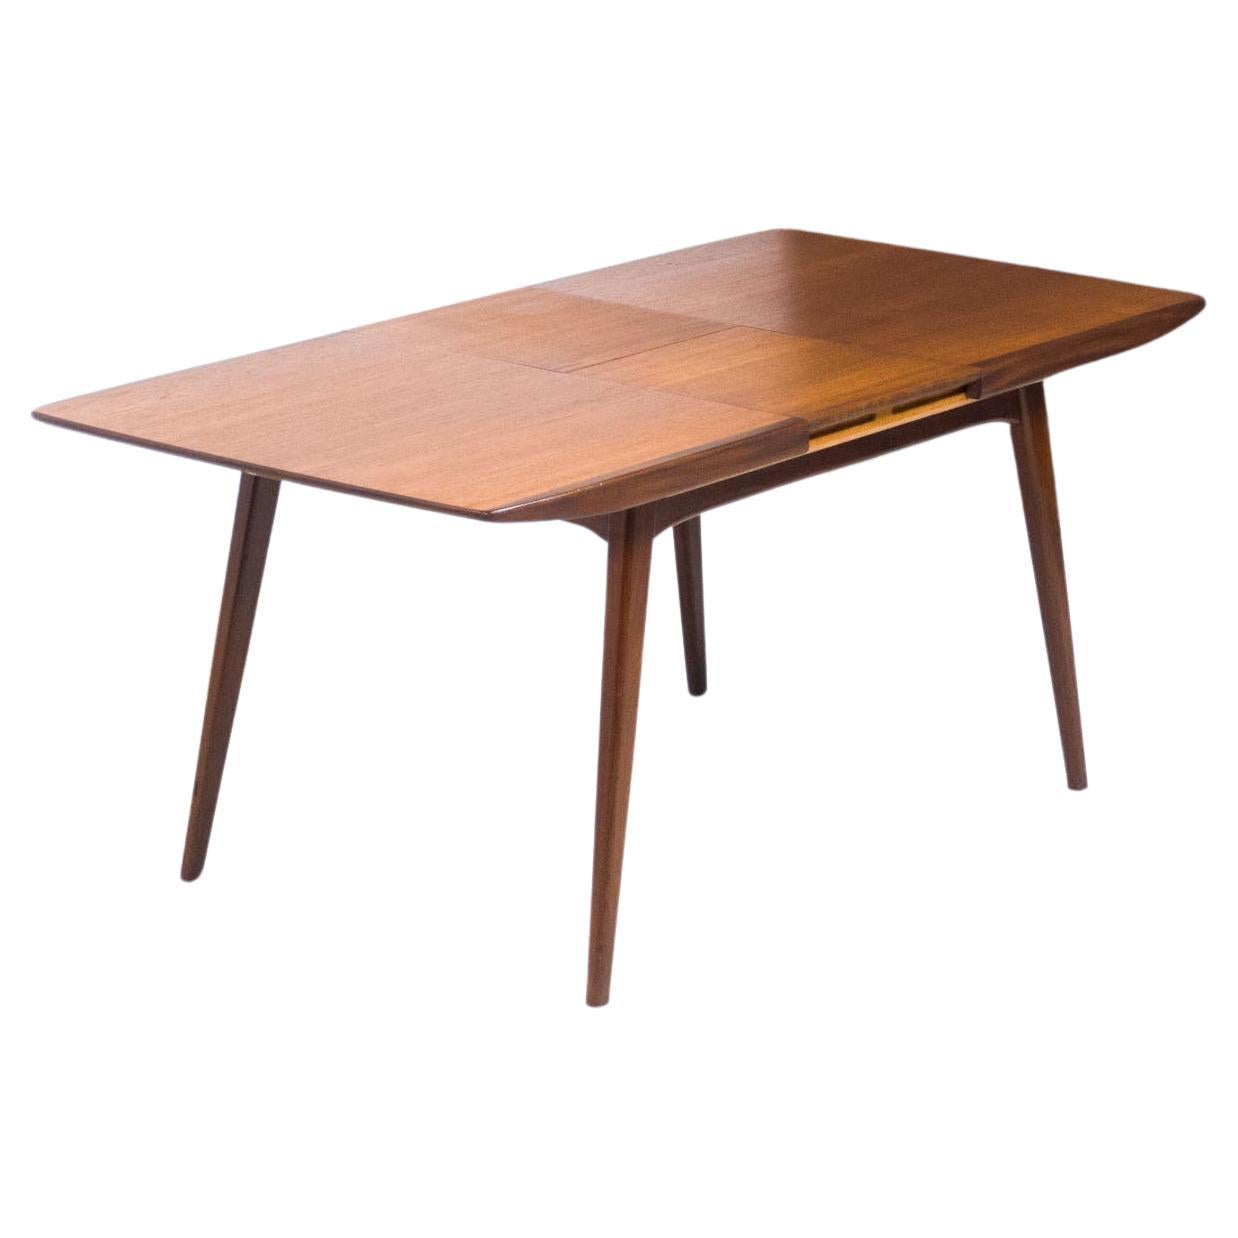 Wébé model ‘Milaan’ teak dining table – Louis van Teeffelen For Sale